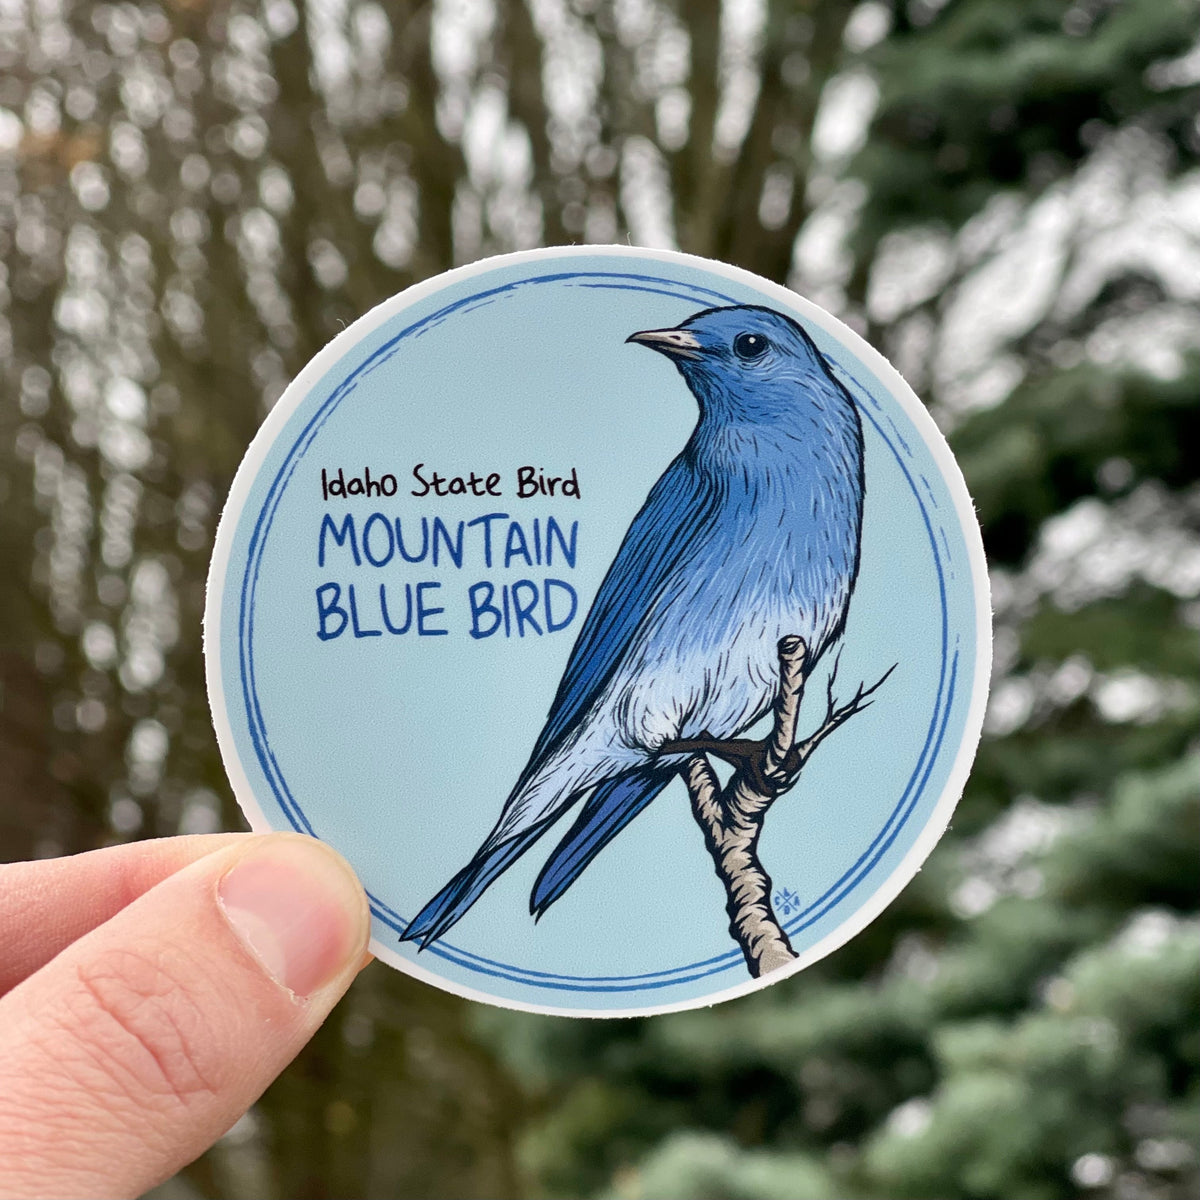 Idaho state bird mountain blue bird